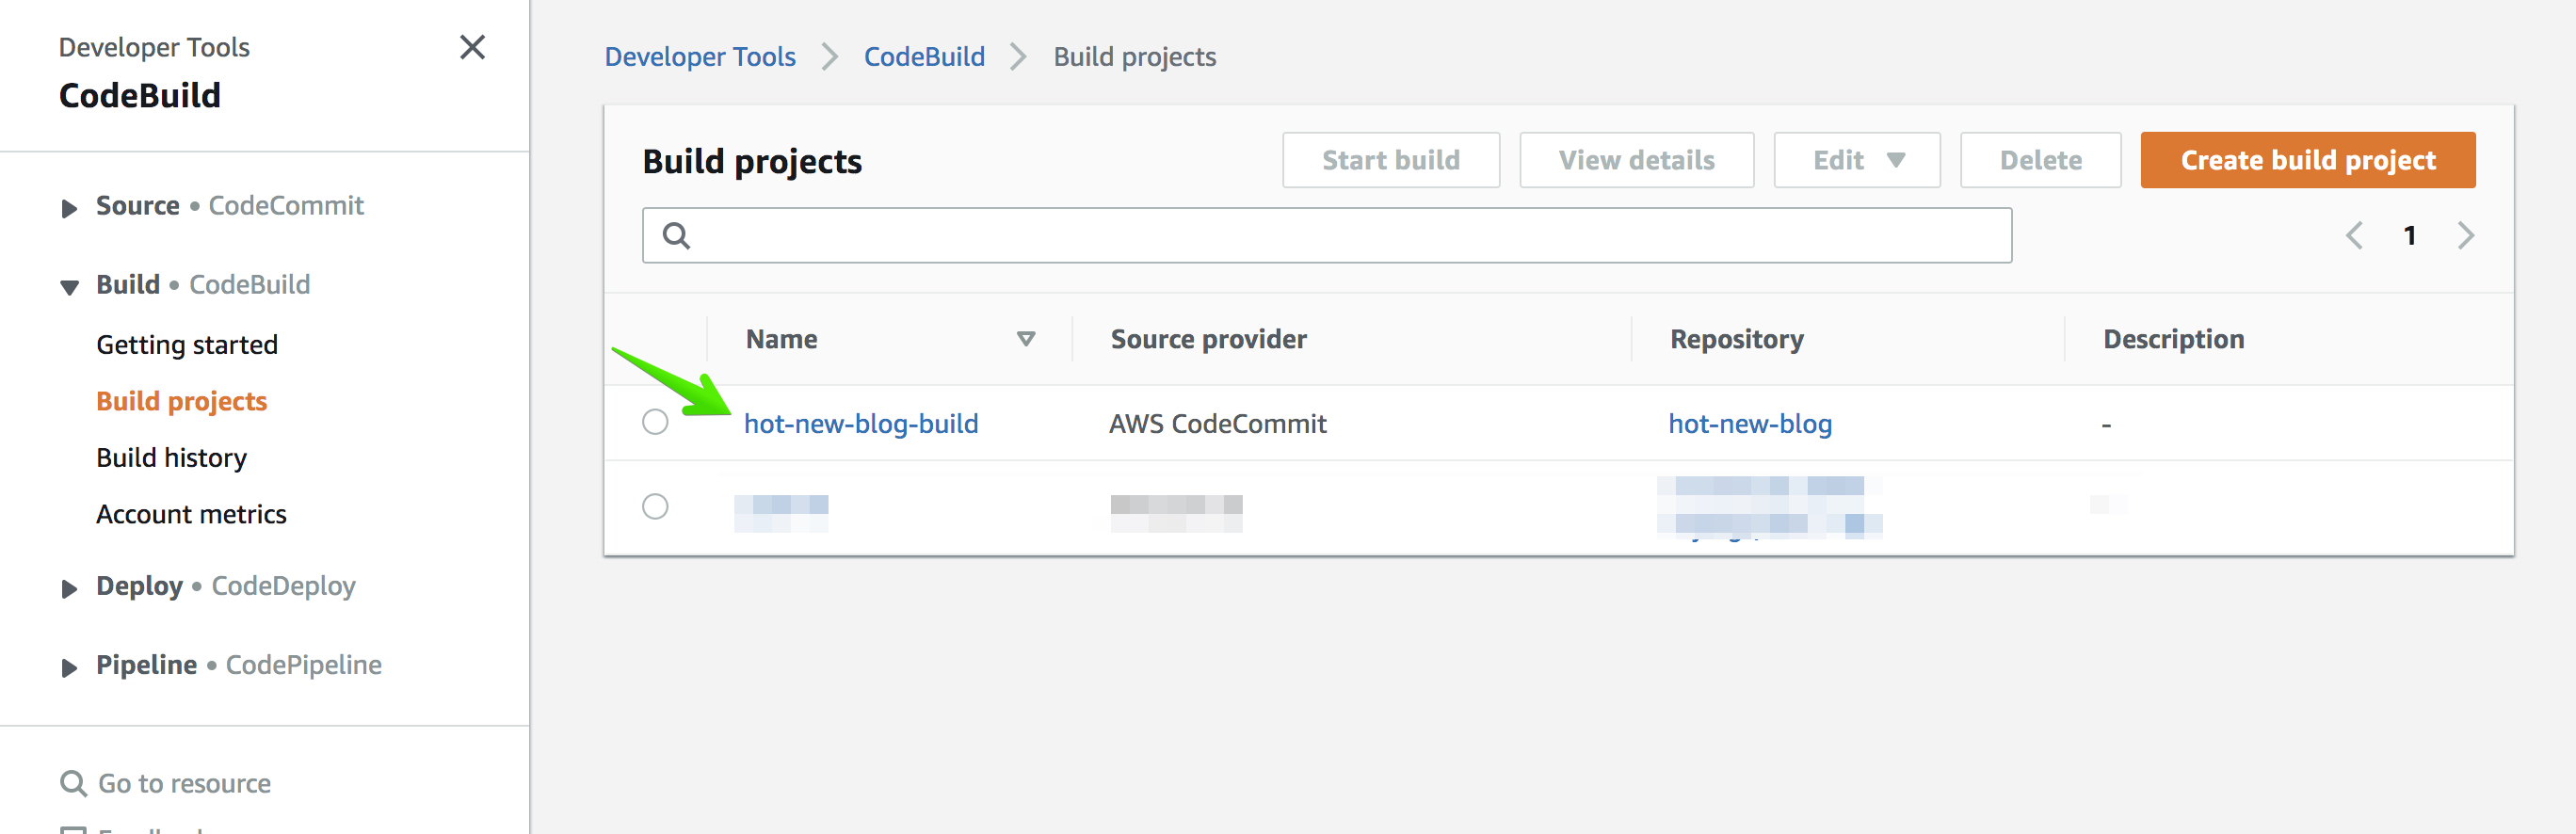 CodeBuild - AWS Developer Tools 2019-08-29 16-17-09